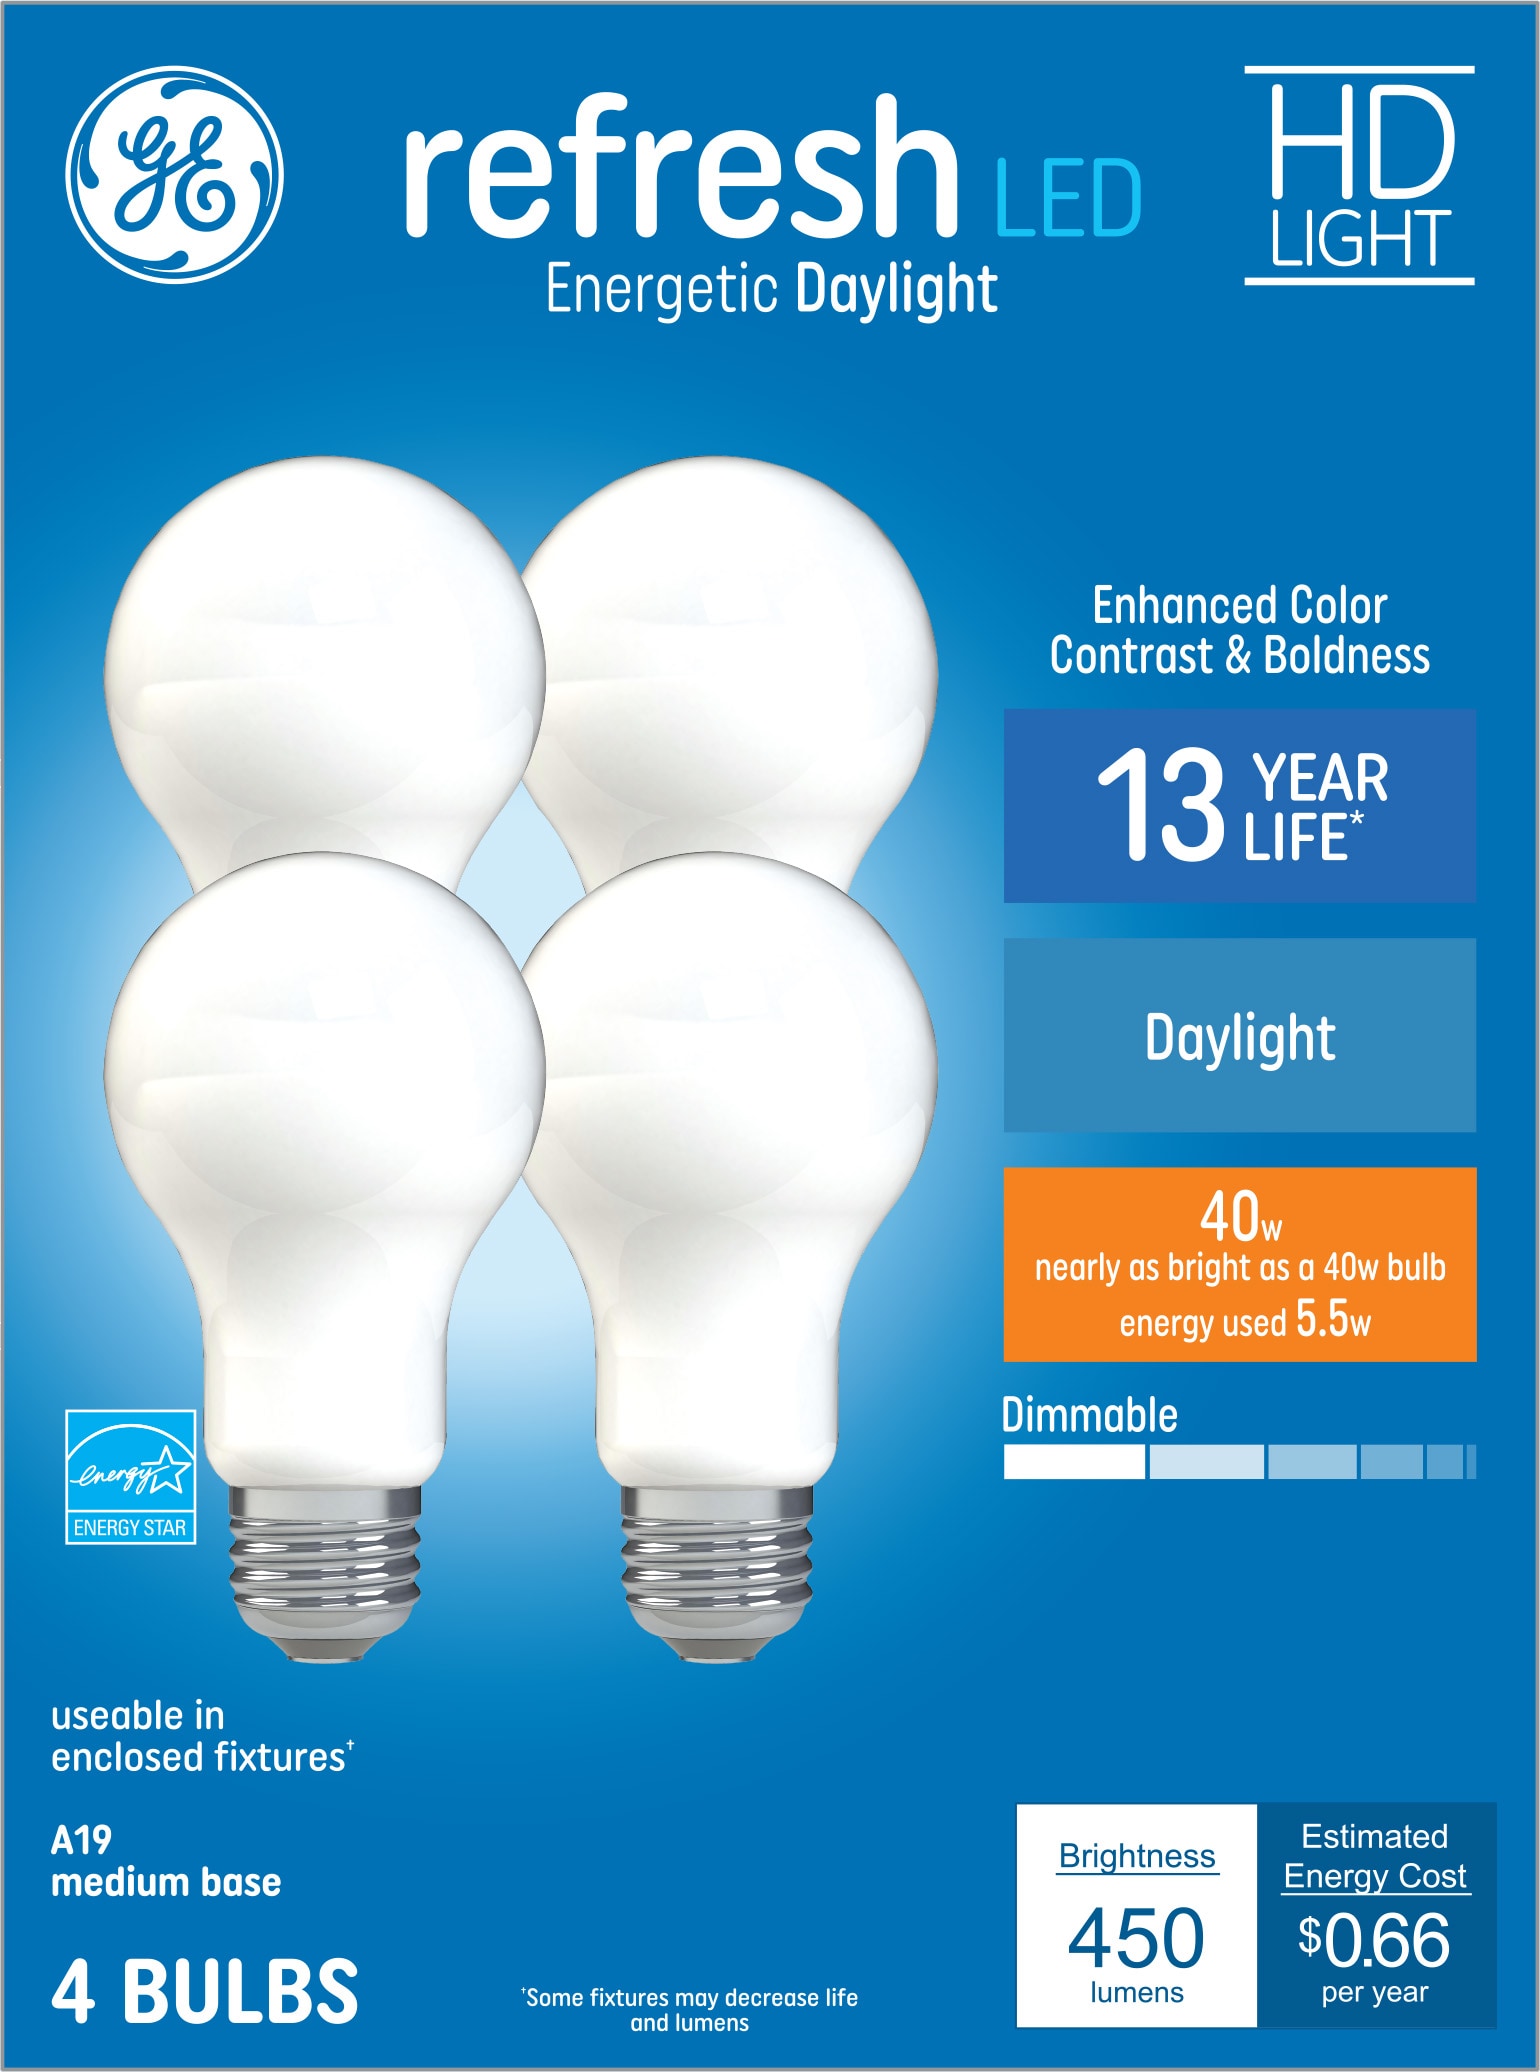 GE LED Light Bulbs, Refrigerator or Freezer Light Bulb, 4.5 Watt, Daylight  (1 Pack)